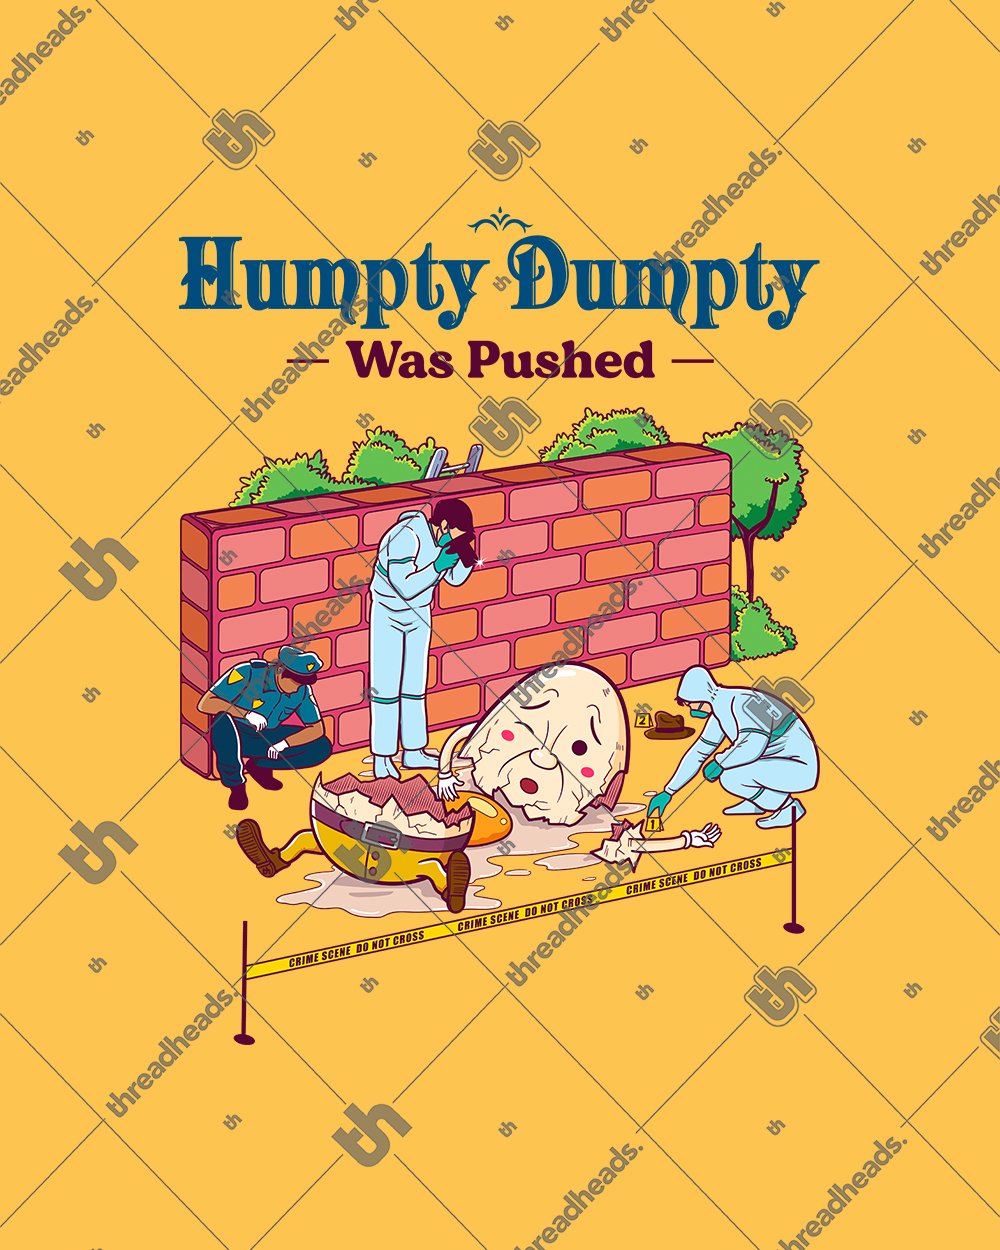 Humpty Dumpty was Pushed T-Shirt Australia Online #colour_yellow